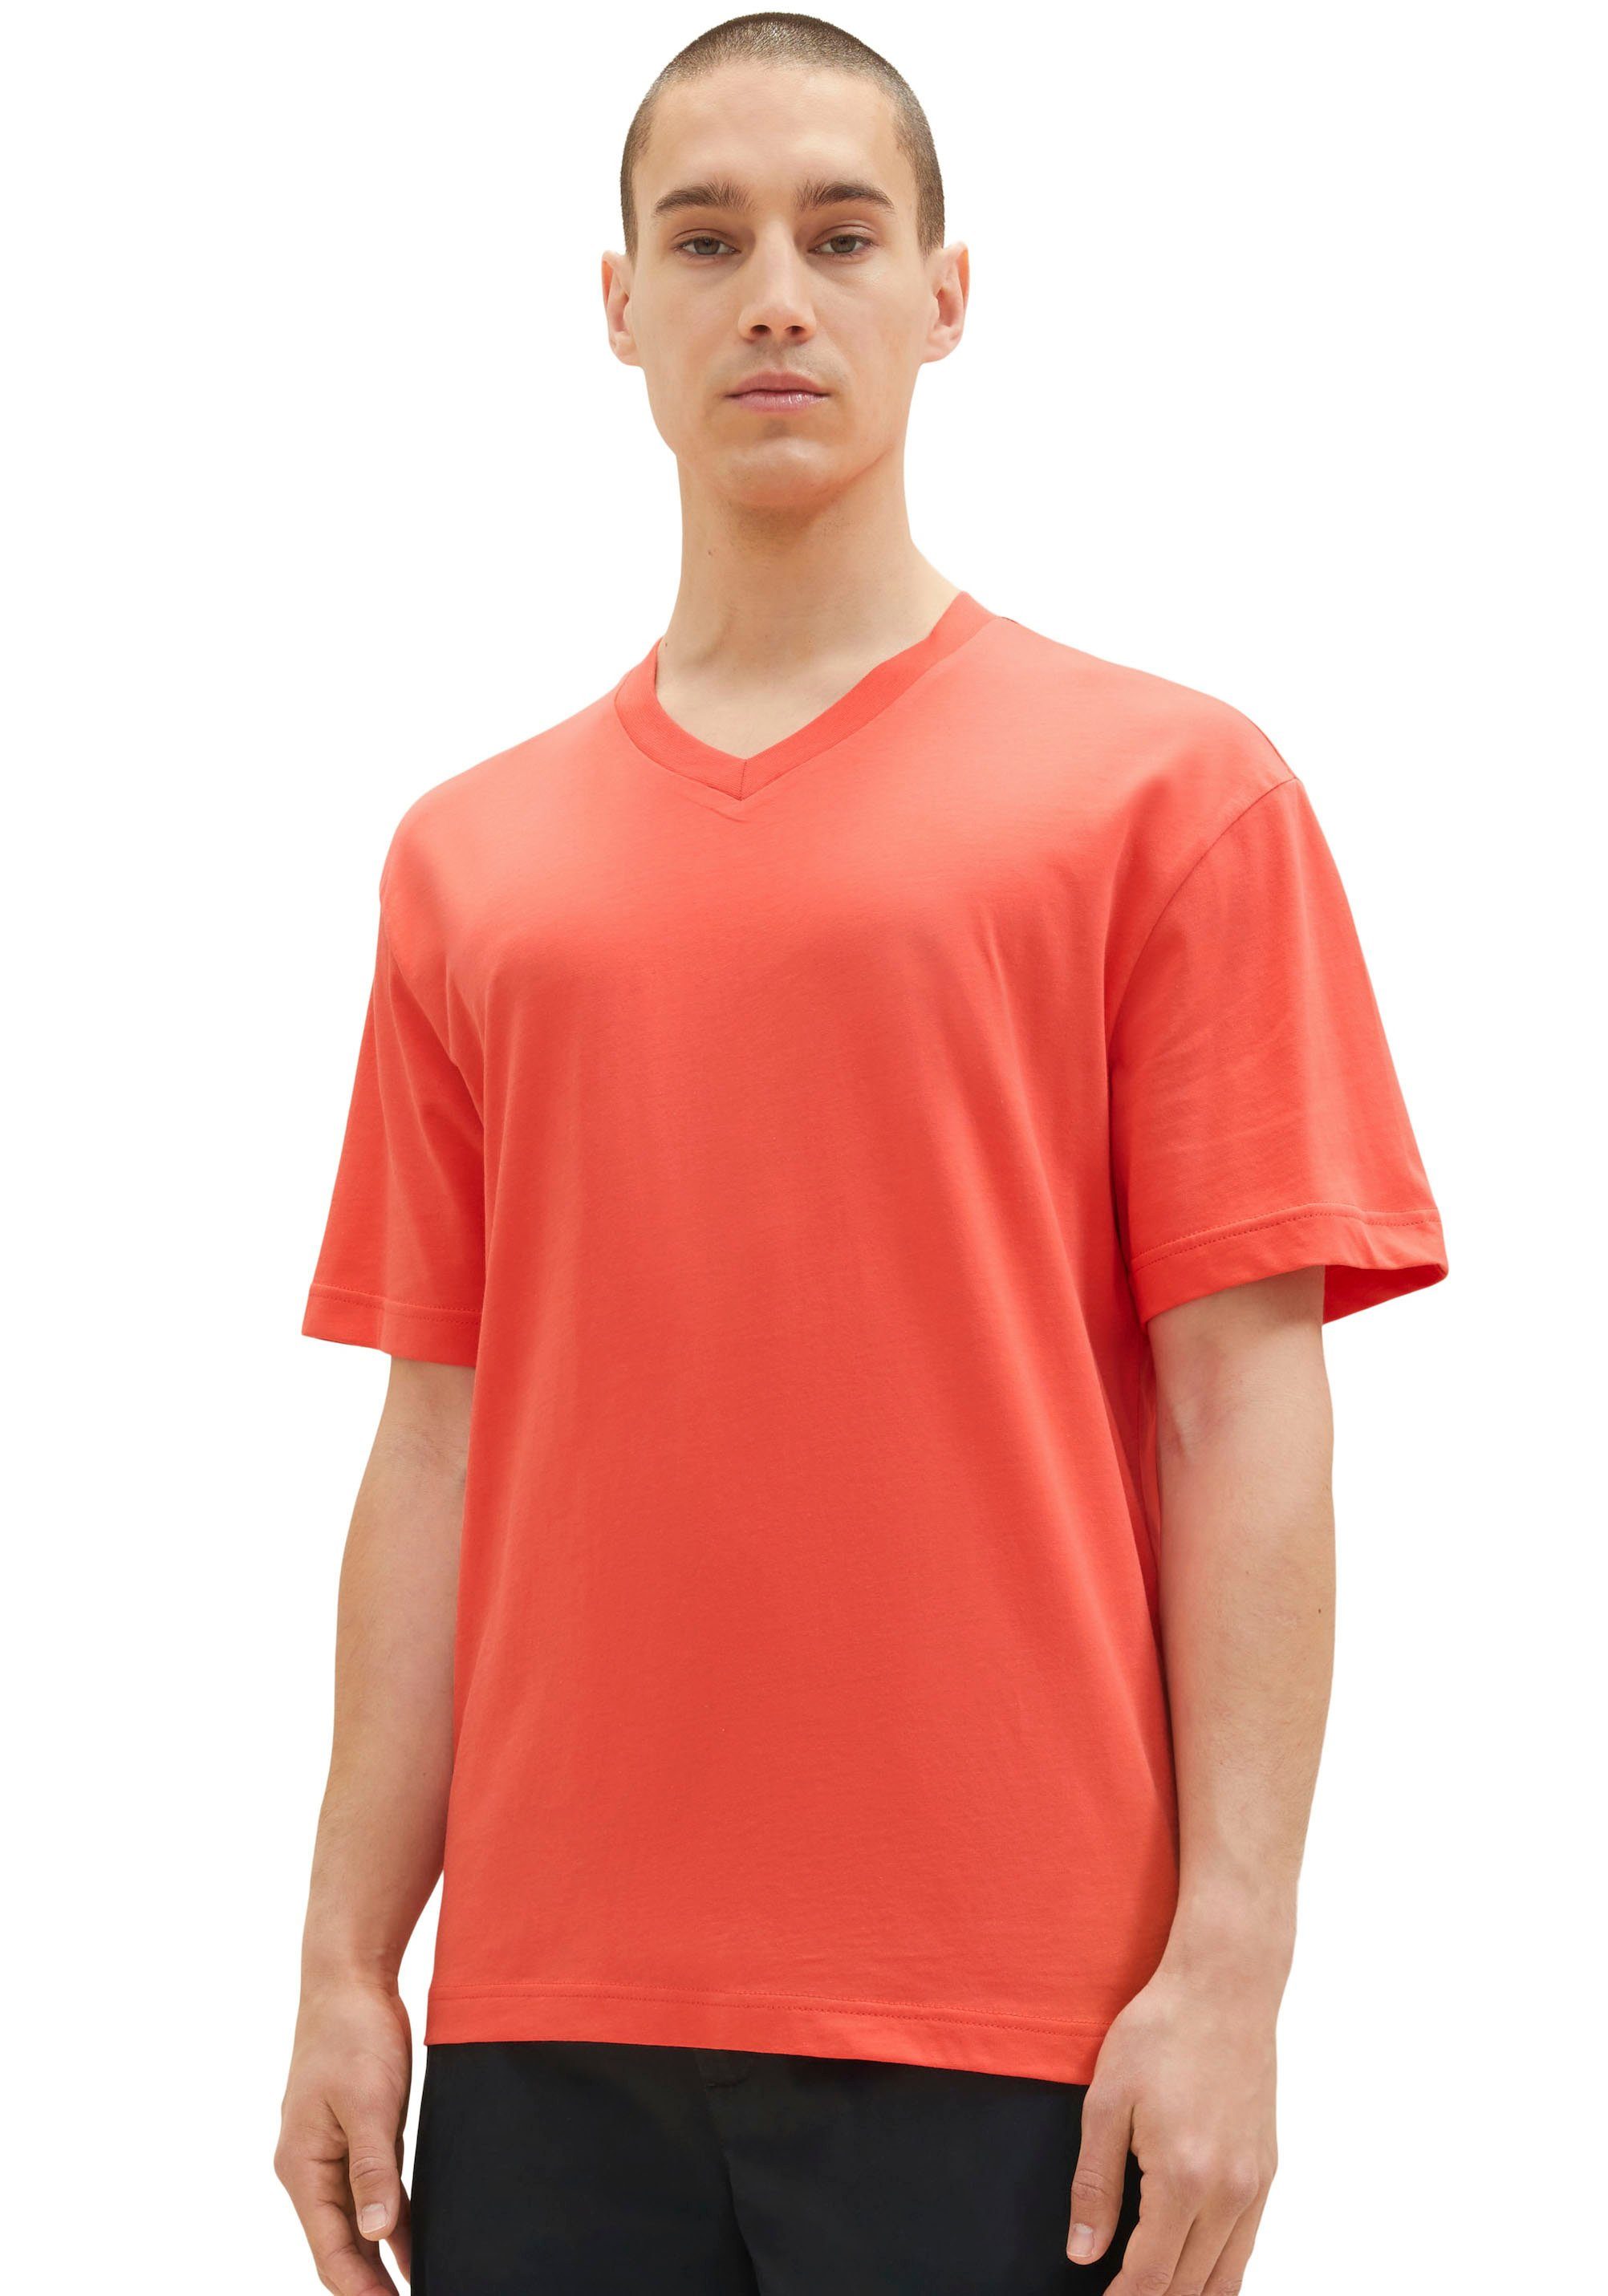 TOM TAILOR Denim T-Shirt rot V-Ausschnitt mit abgerundetem